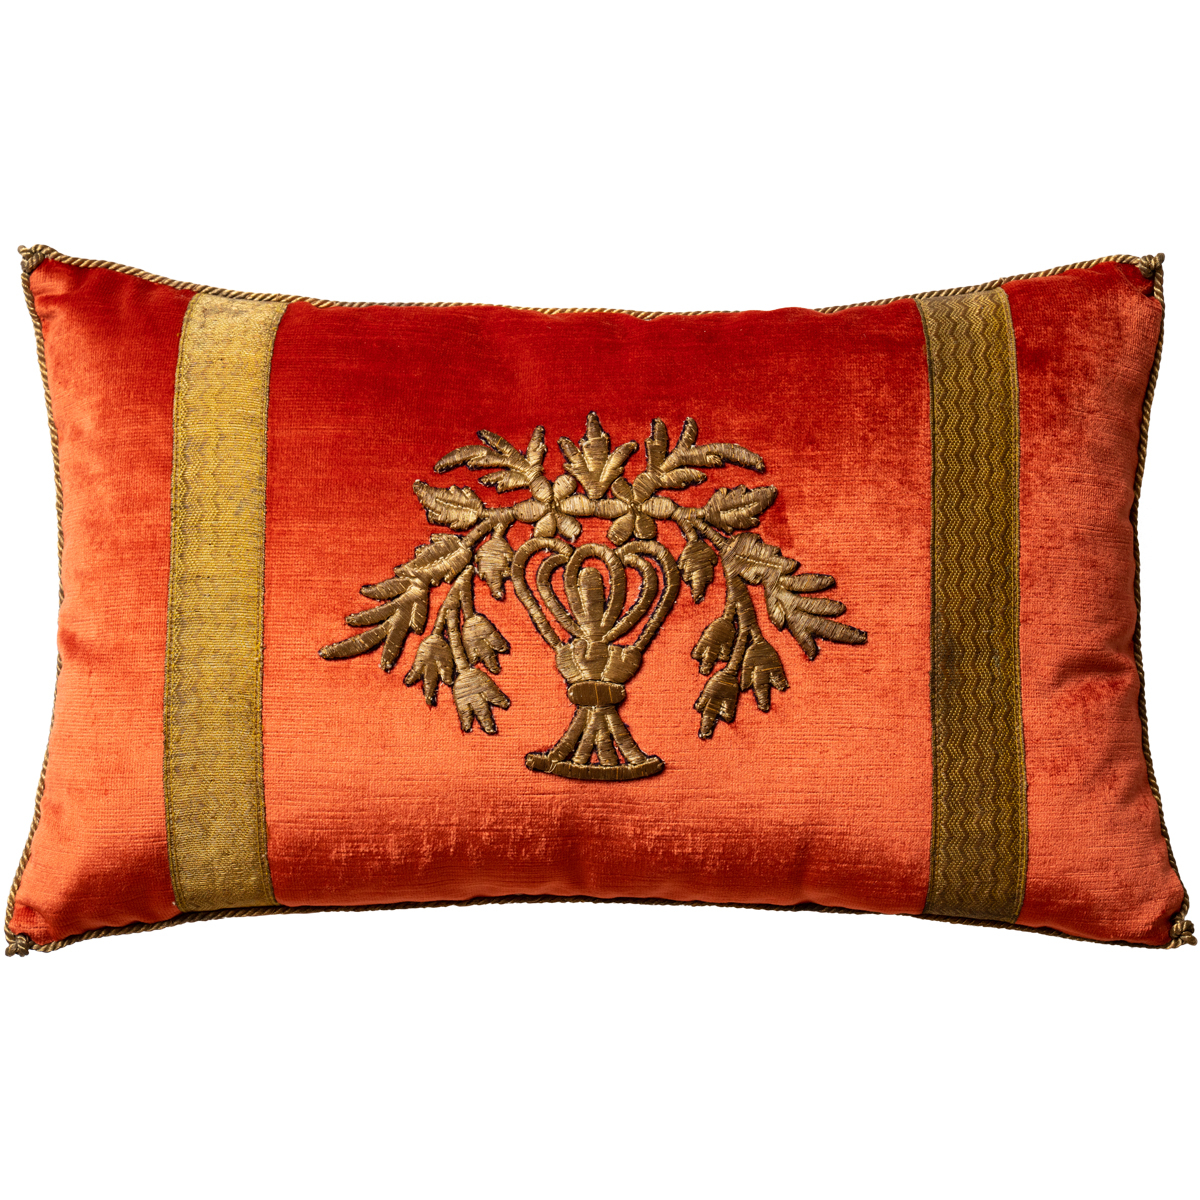 Ottoman Embroidery Patterns Embroidery Rebecca Vizard Site